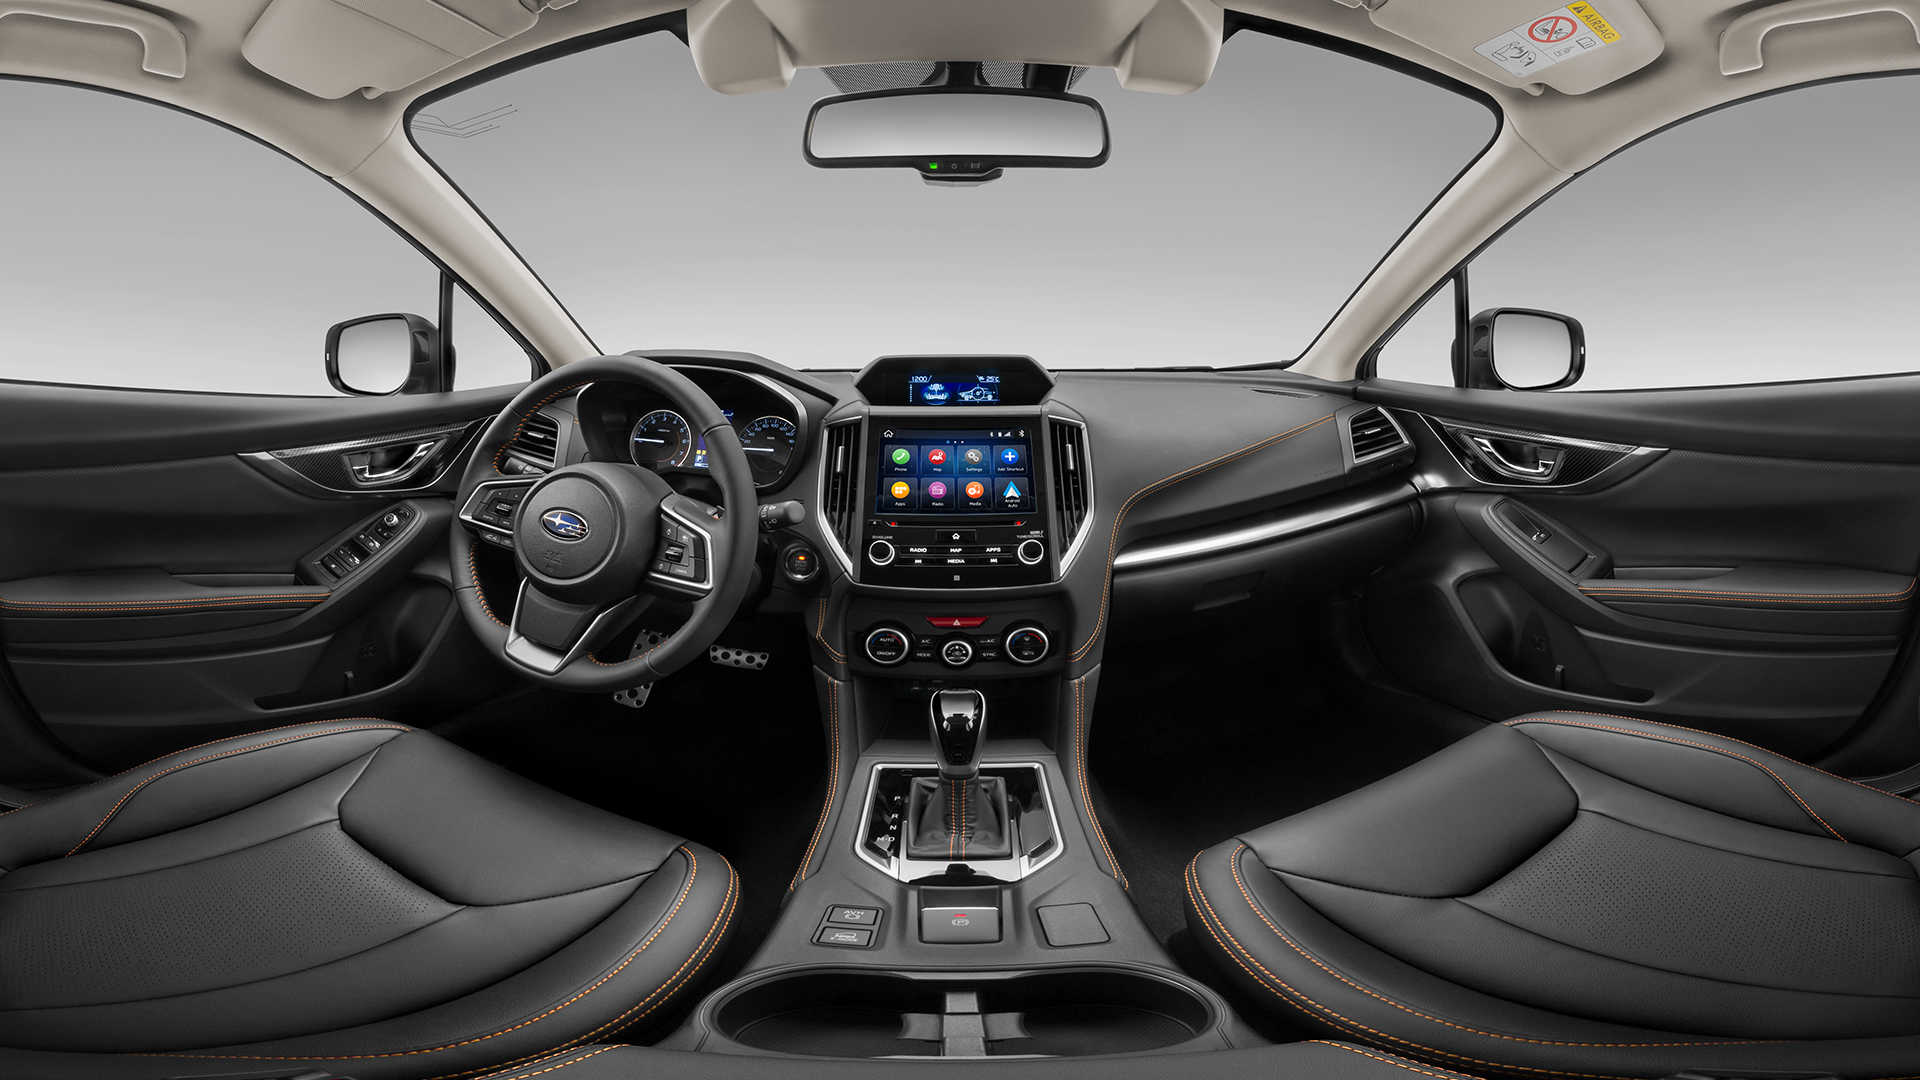 2020 Subaru XV Interior Features and Seating Options | Subaru